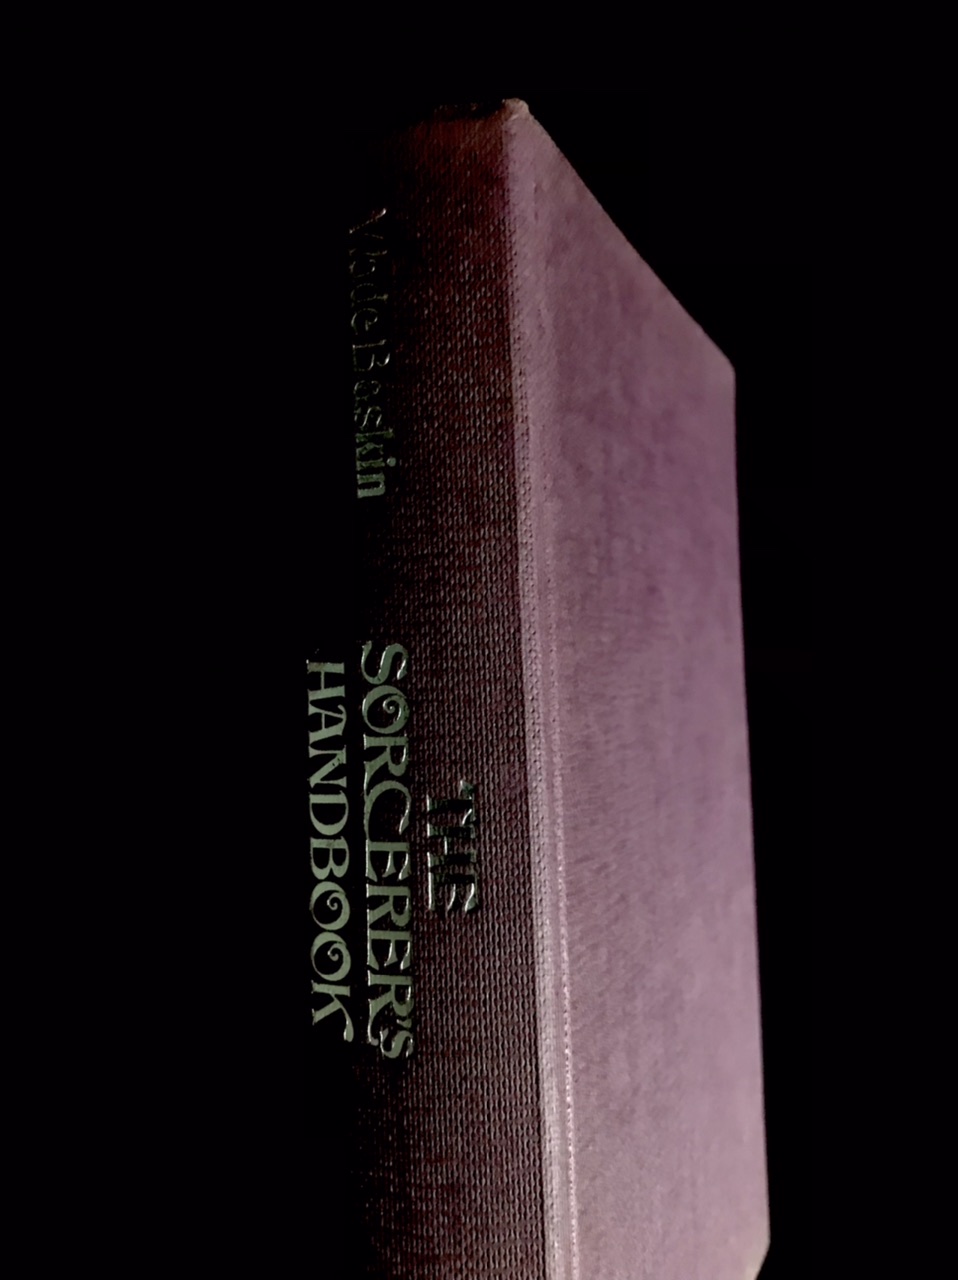 The Sorcerer's Handbook by Wade Baskin